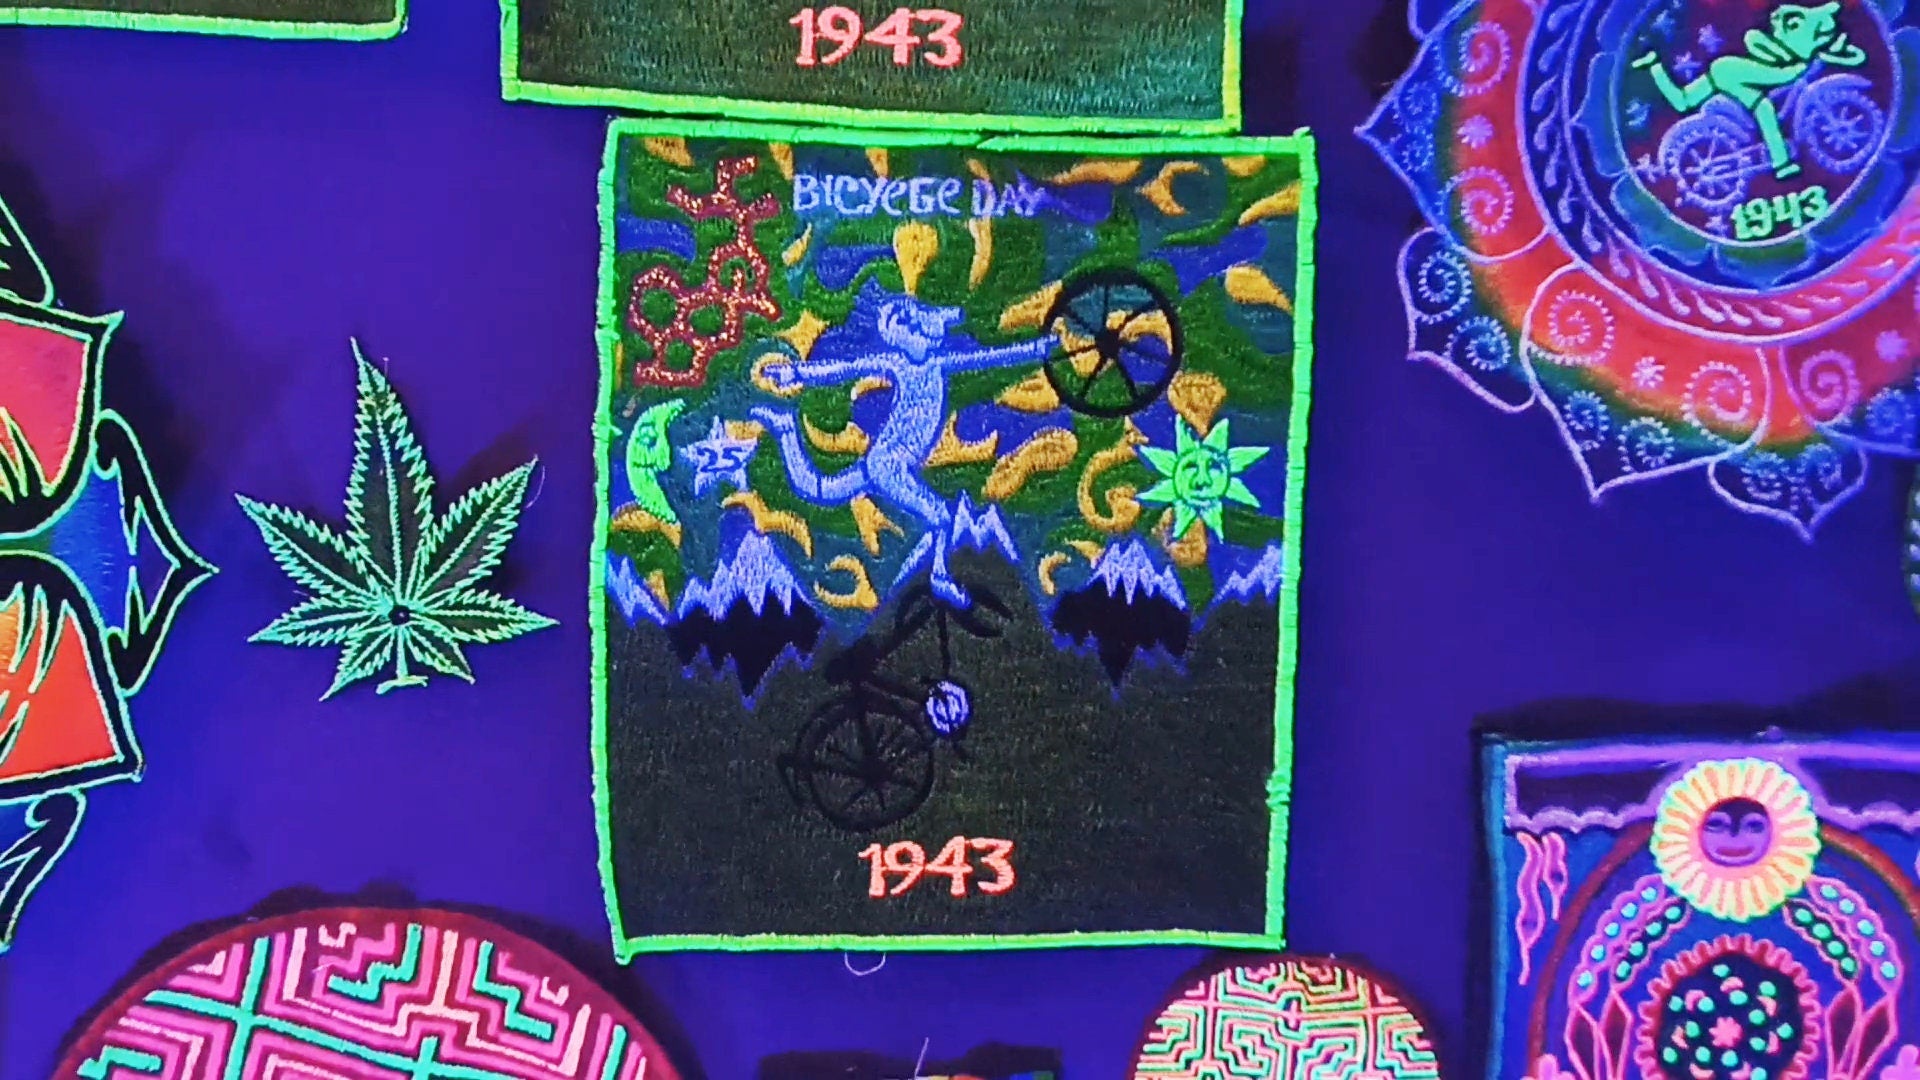 Green Psycycle Day LSD T-Shirt Albert Hofmann Bicycle Day art handmade embroidery no print psychedelic goa tshirt hippie shirt